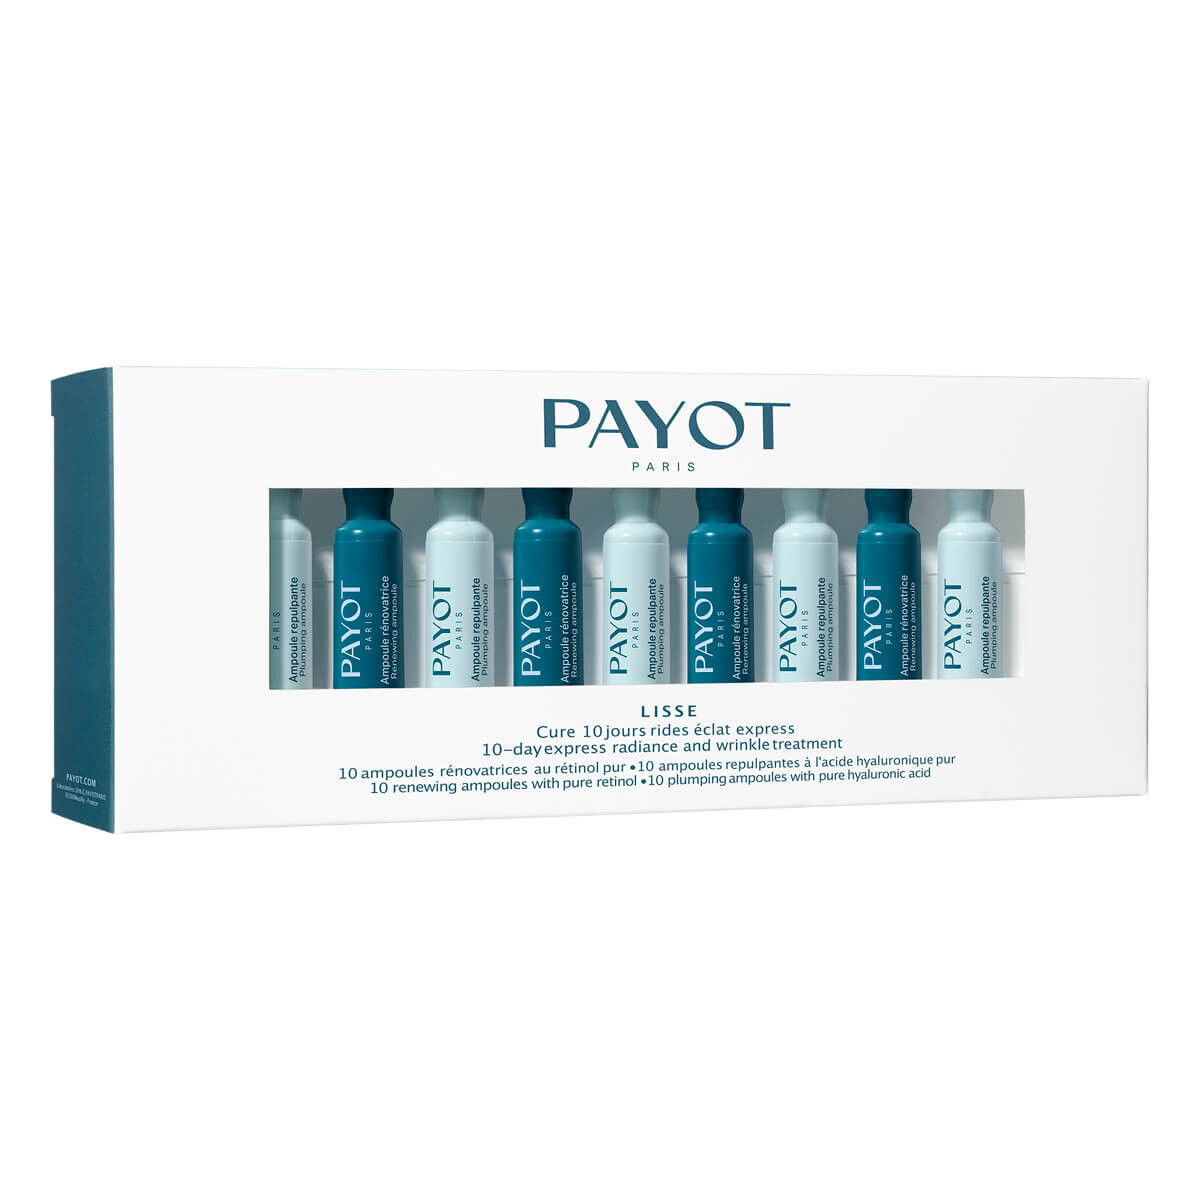 Billede af Payot 10-day Express Radiance and Wrinkle Treatment, Lisse, 20 x 1 ml.